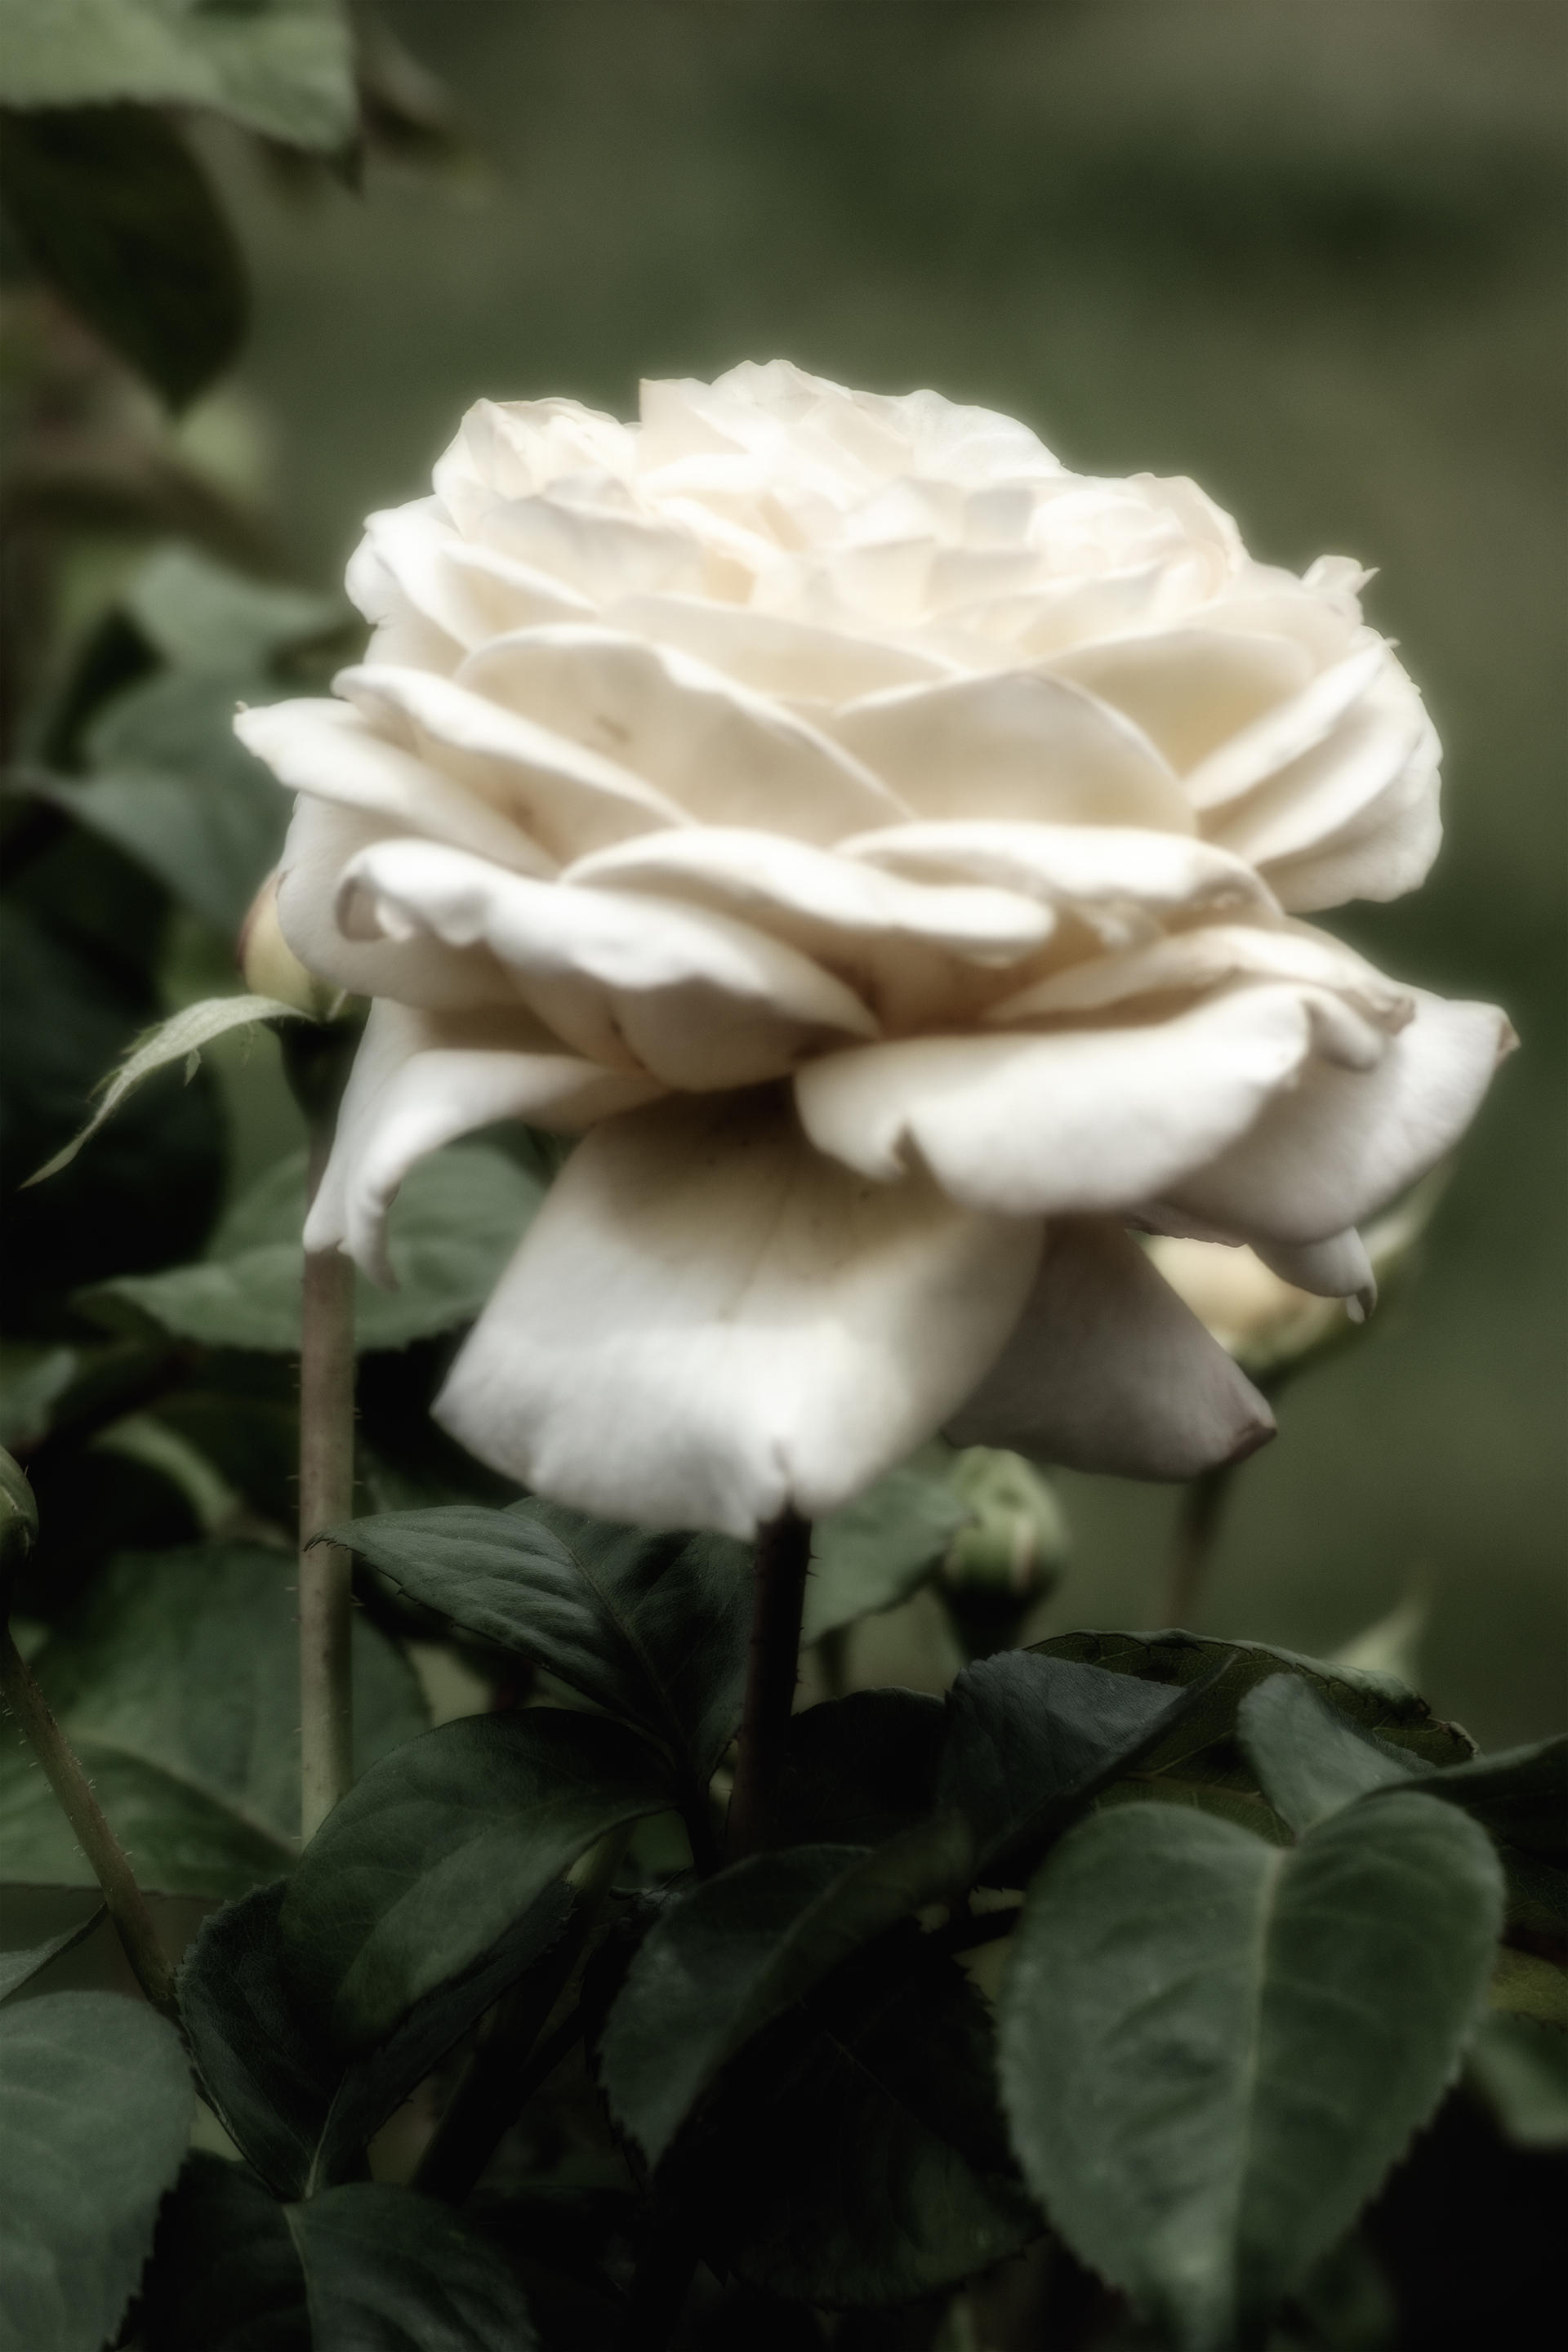 Soft White Rose by acshurte on DeviantArt